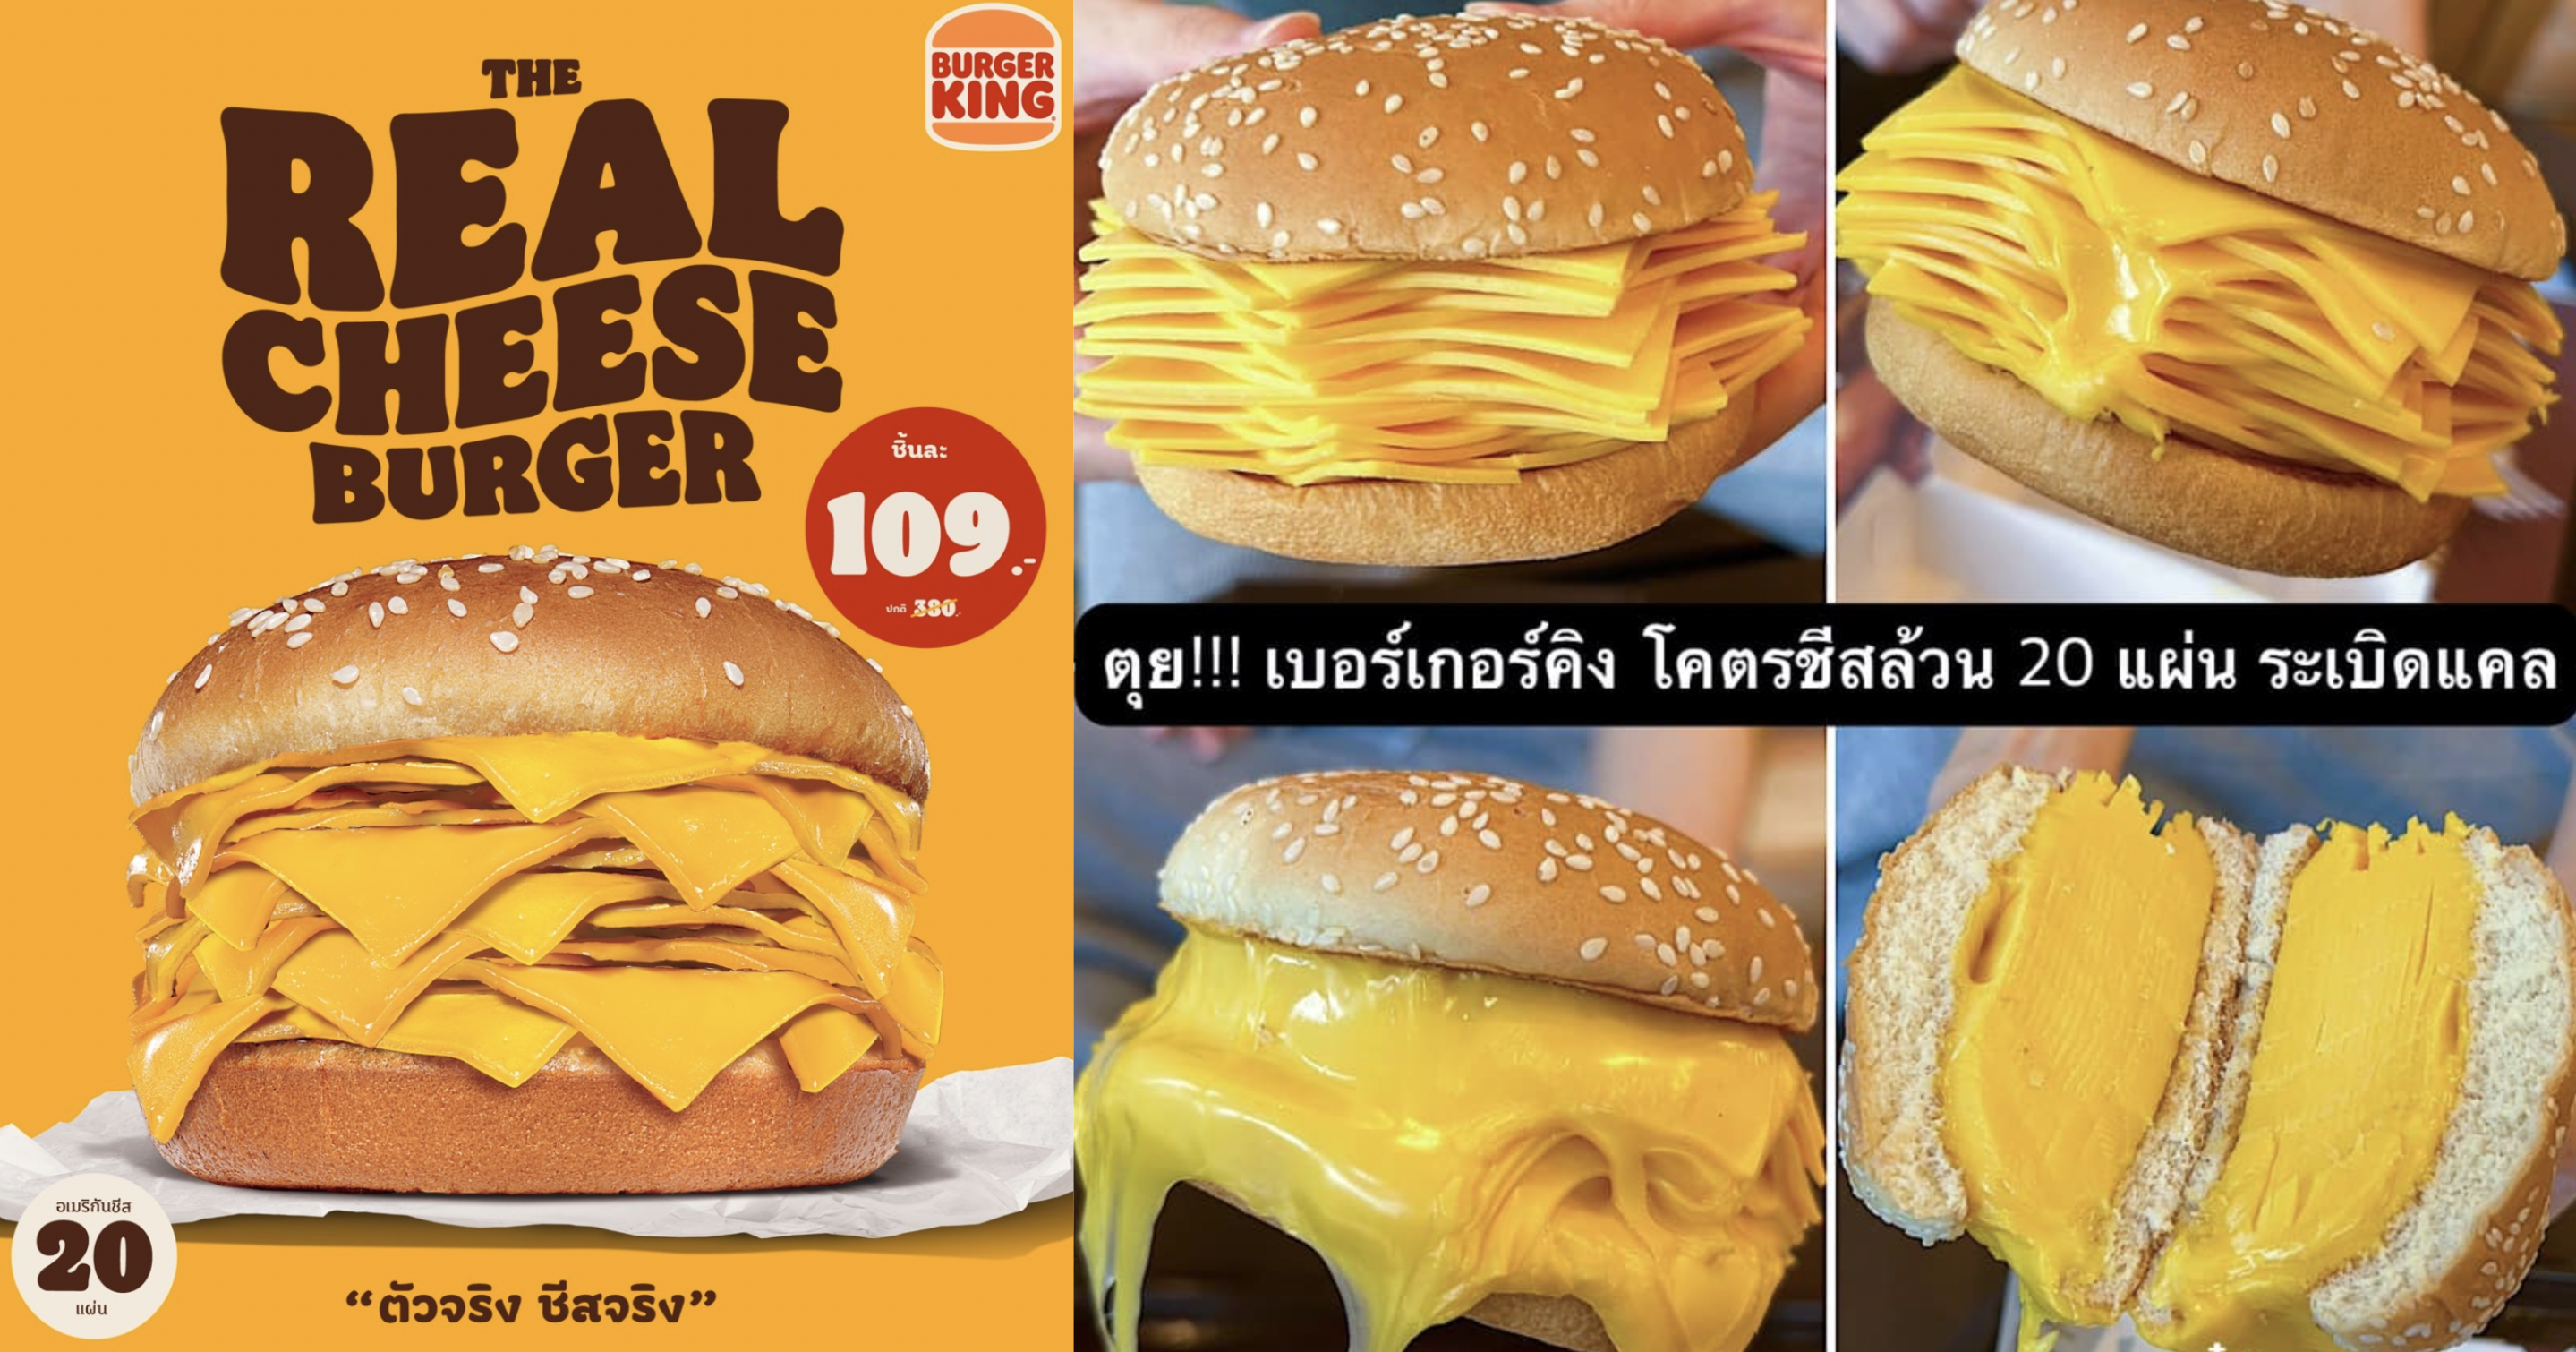 https://static.mothership.sg/1/2023/07/thai-burger-king-cheeseburger.png